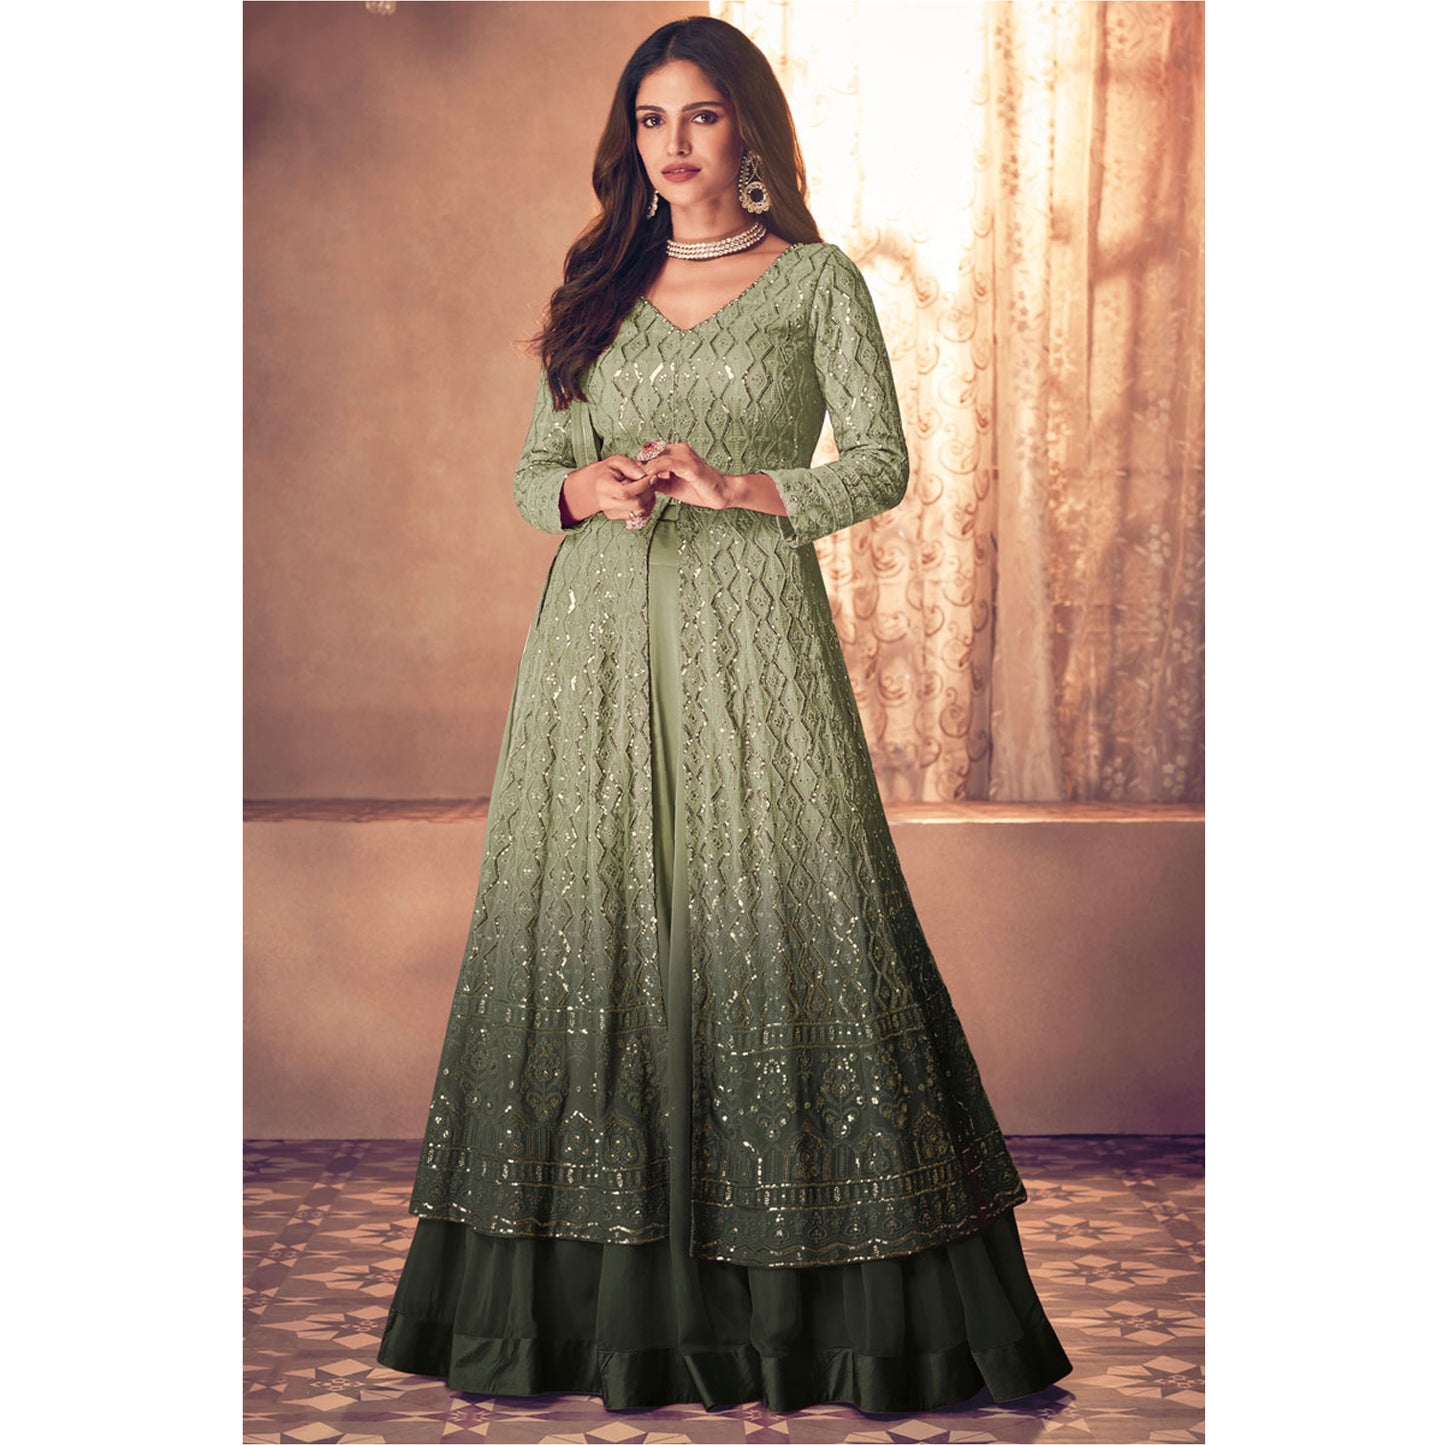 Capitiving Green Color Pakistani Designer Wedding Function Wear Sharara Top Lehenga